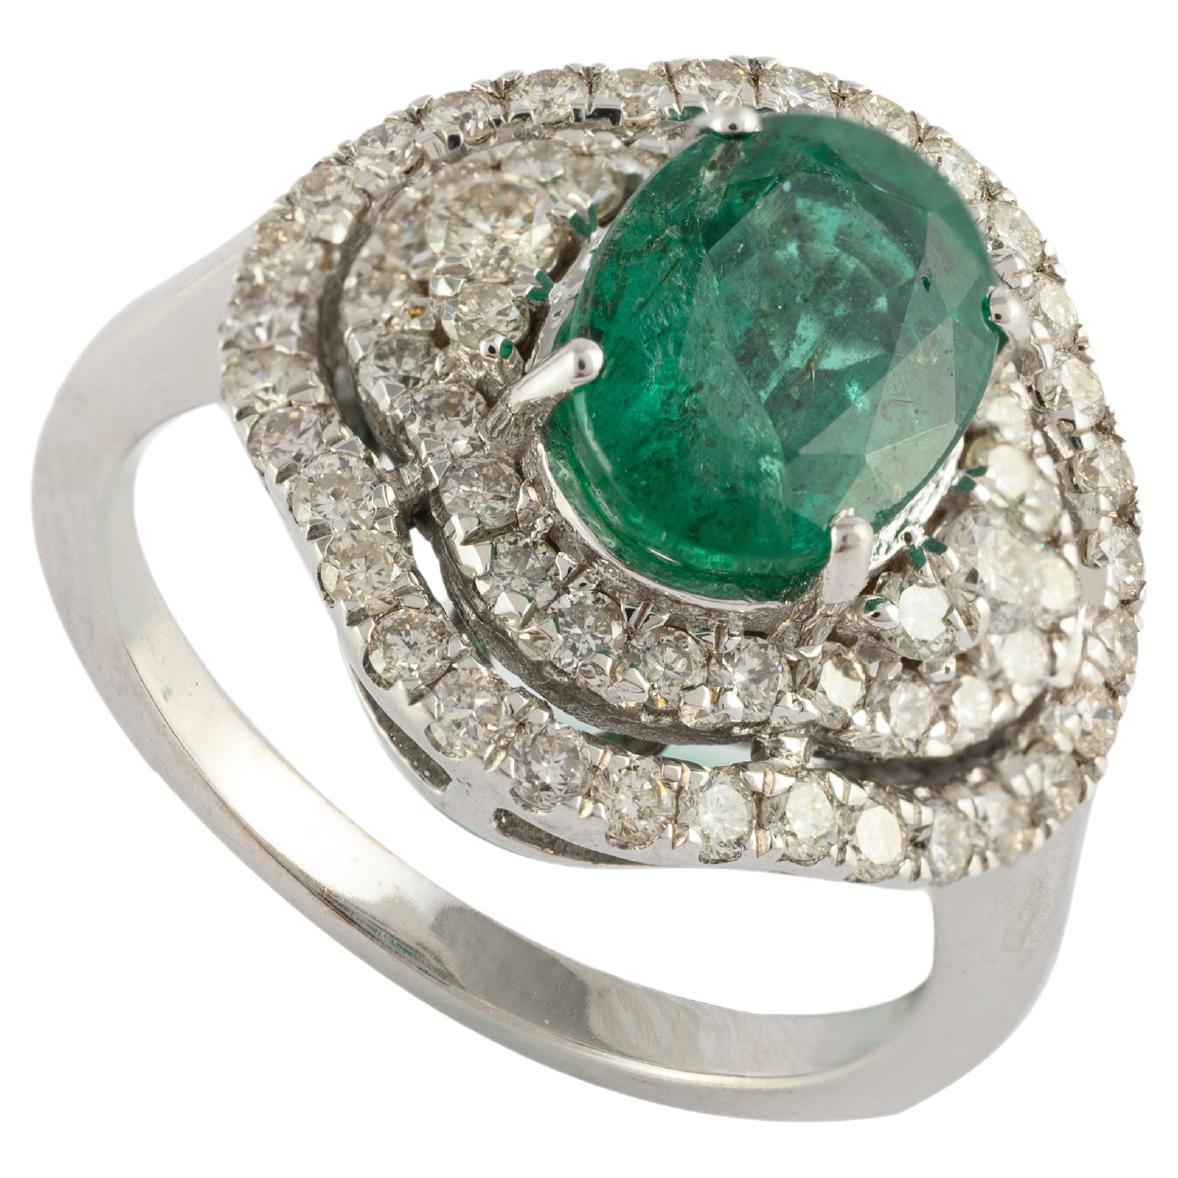 For Sale:  Art Deco Natural Emerald Regalia Ring with Diamonds 14k Solid White Gold